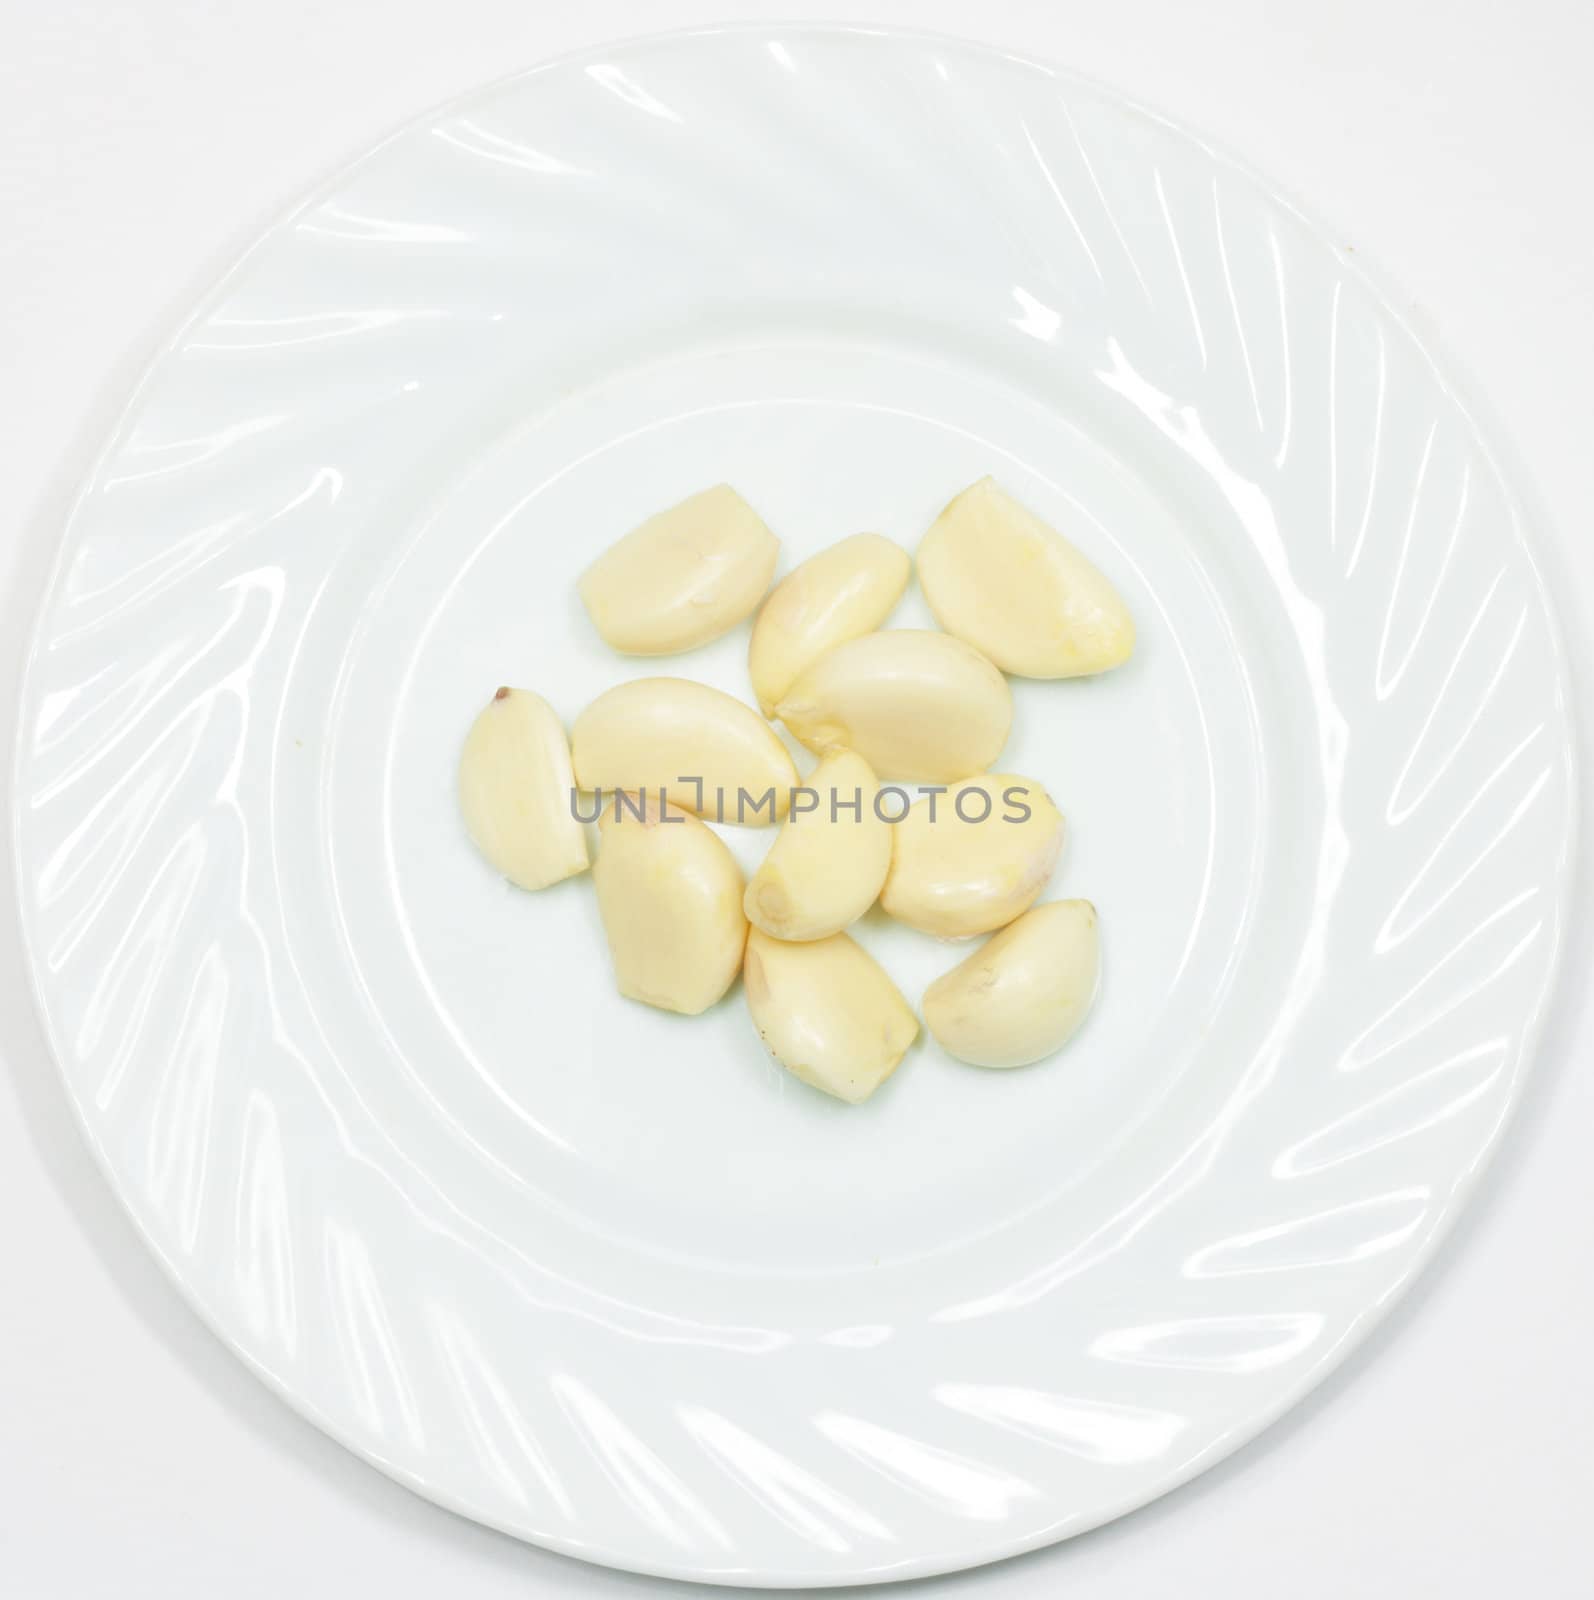 peeled garlic in the dish by schankz